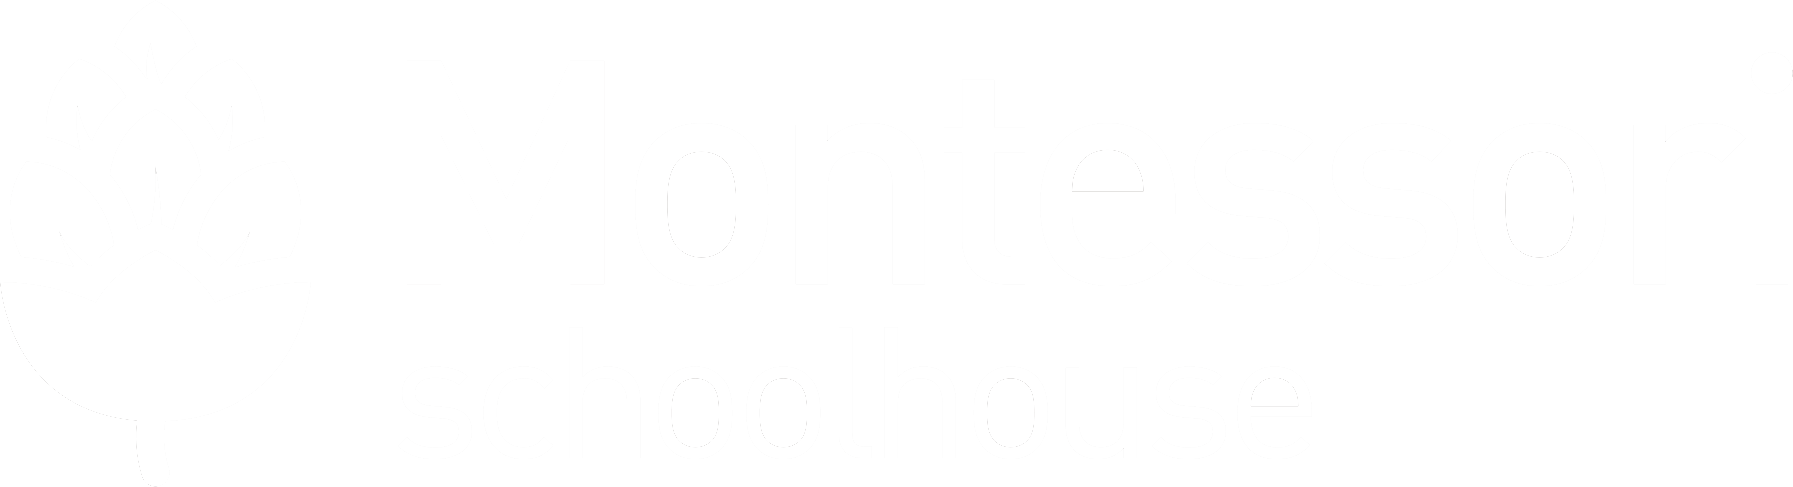 Montessori Schoolhouse Logroño